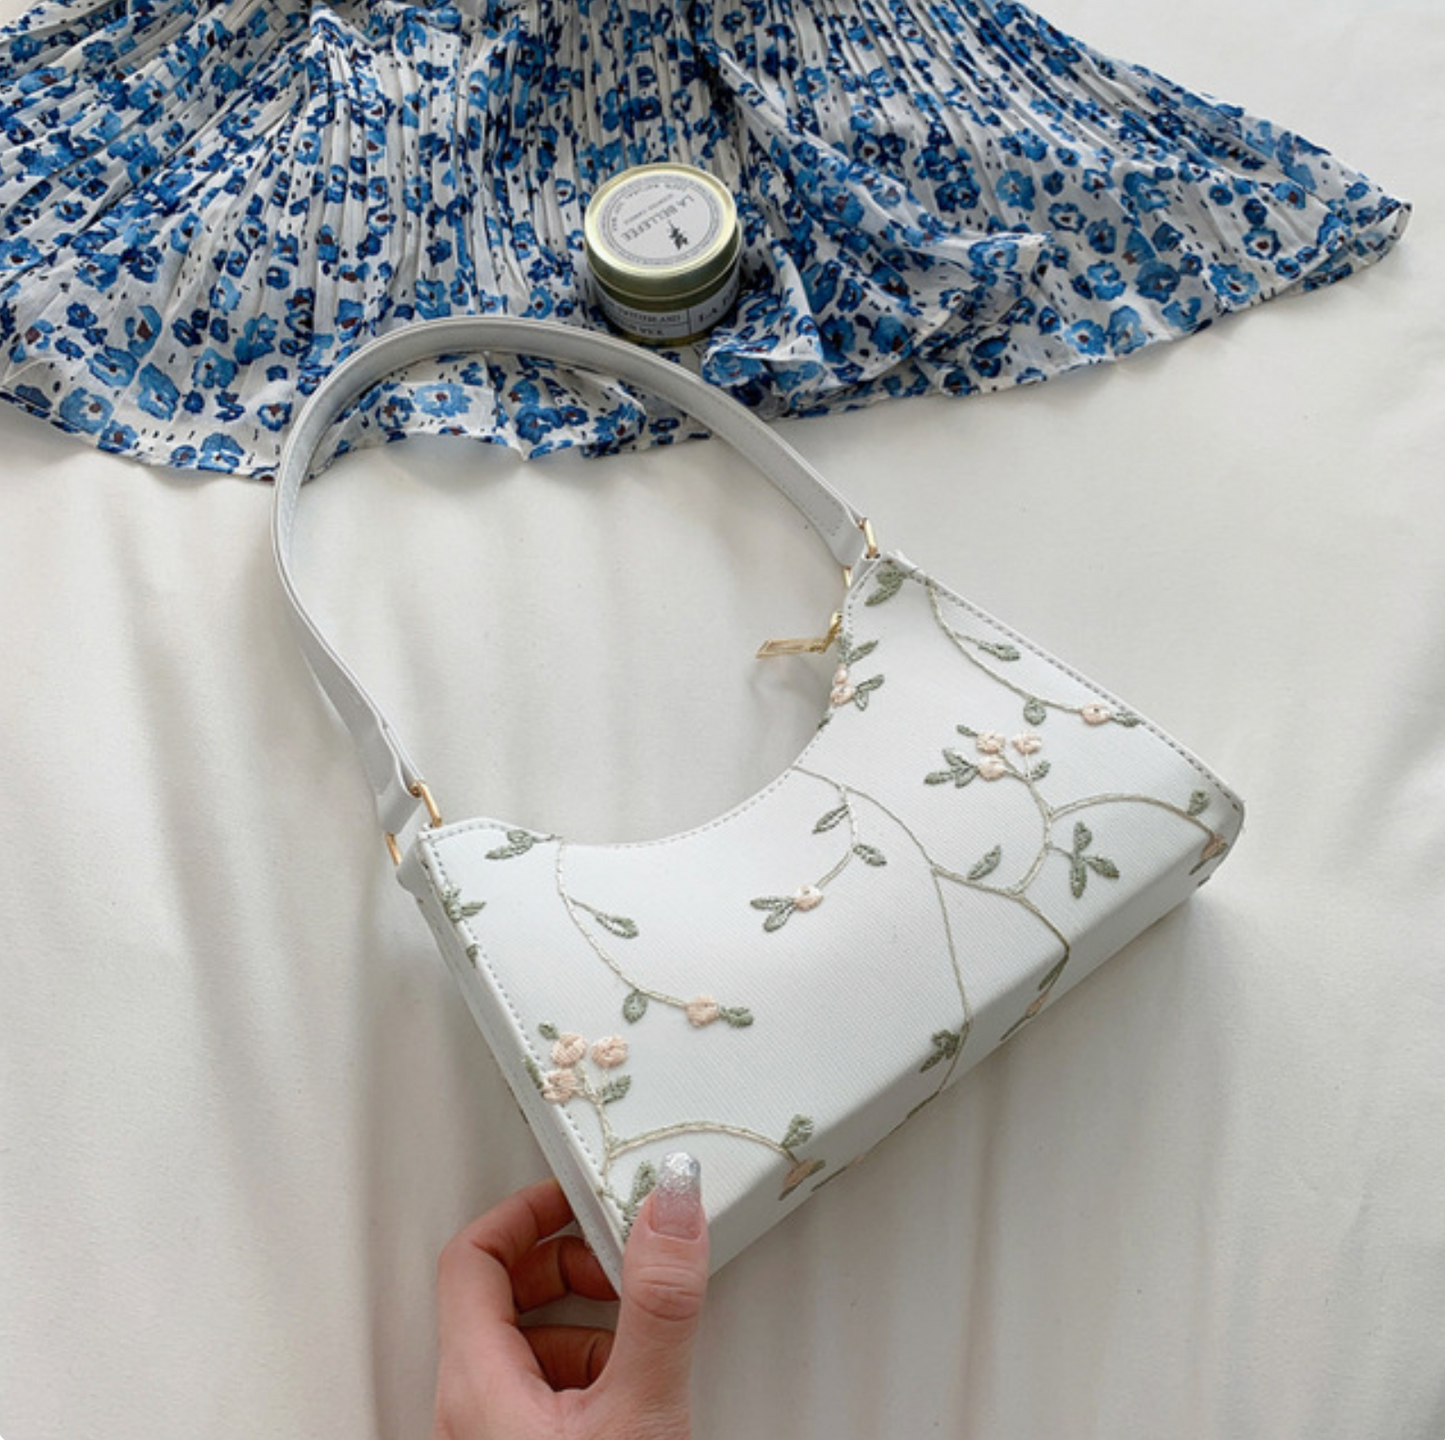 Flower Embroidered Handbag